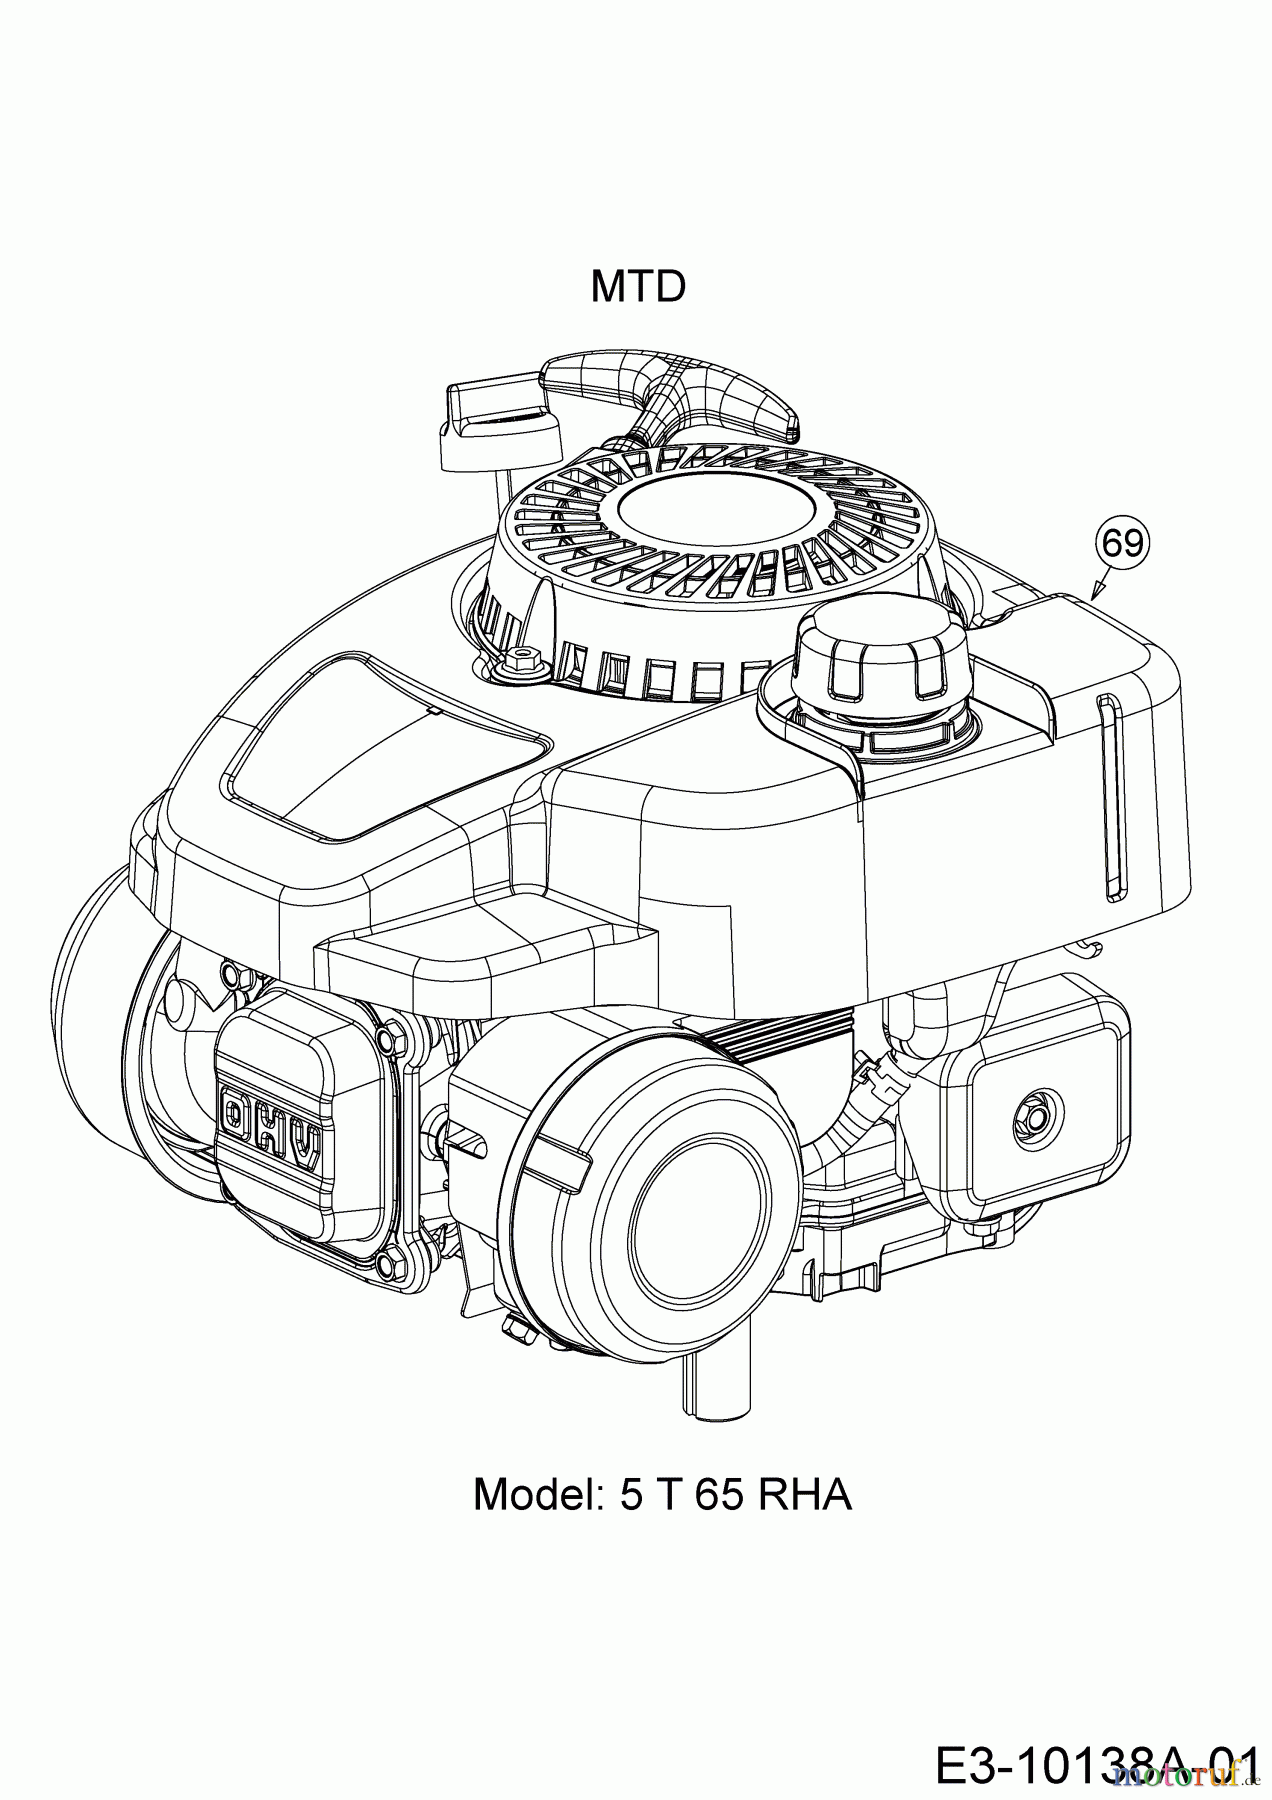  Cub Cadet Petrol mower self propelled LM1 CR53 12A-PQSC603   (2017) Engine MTD